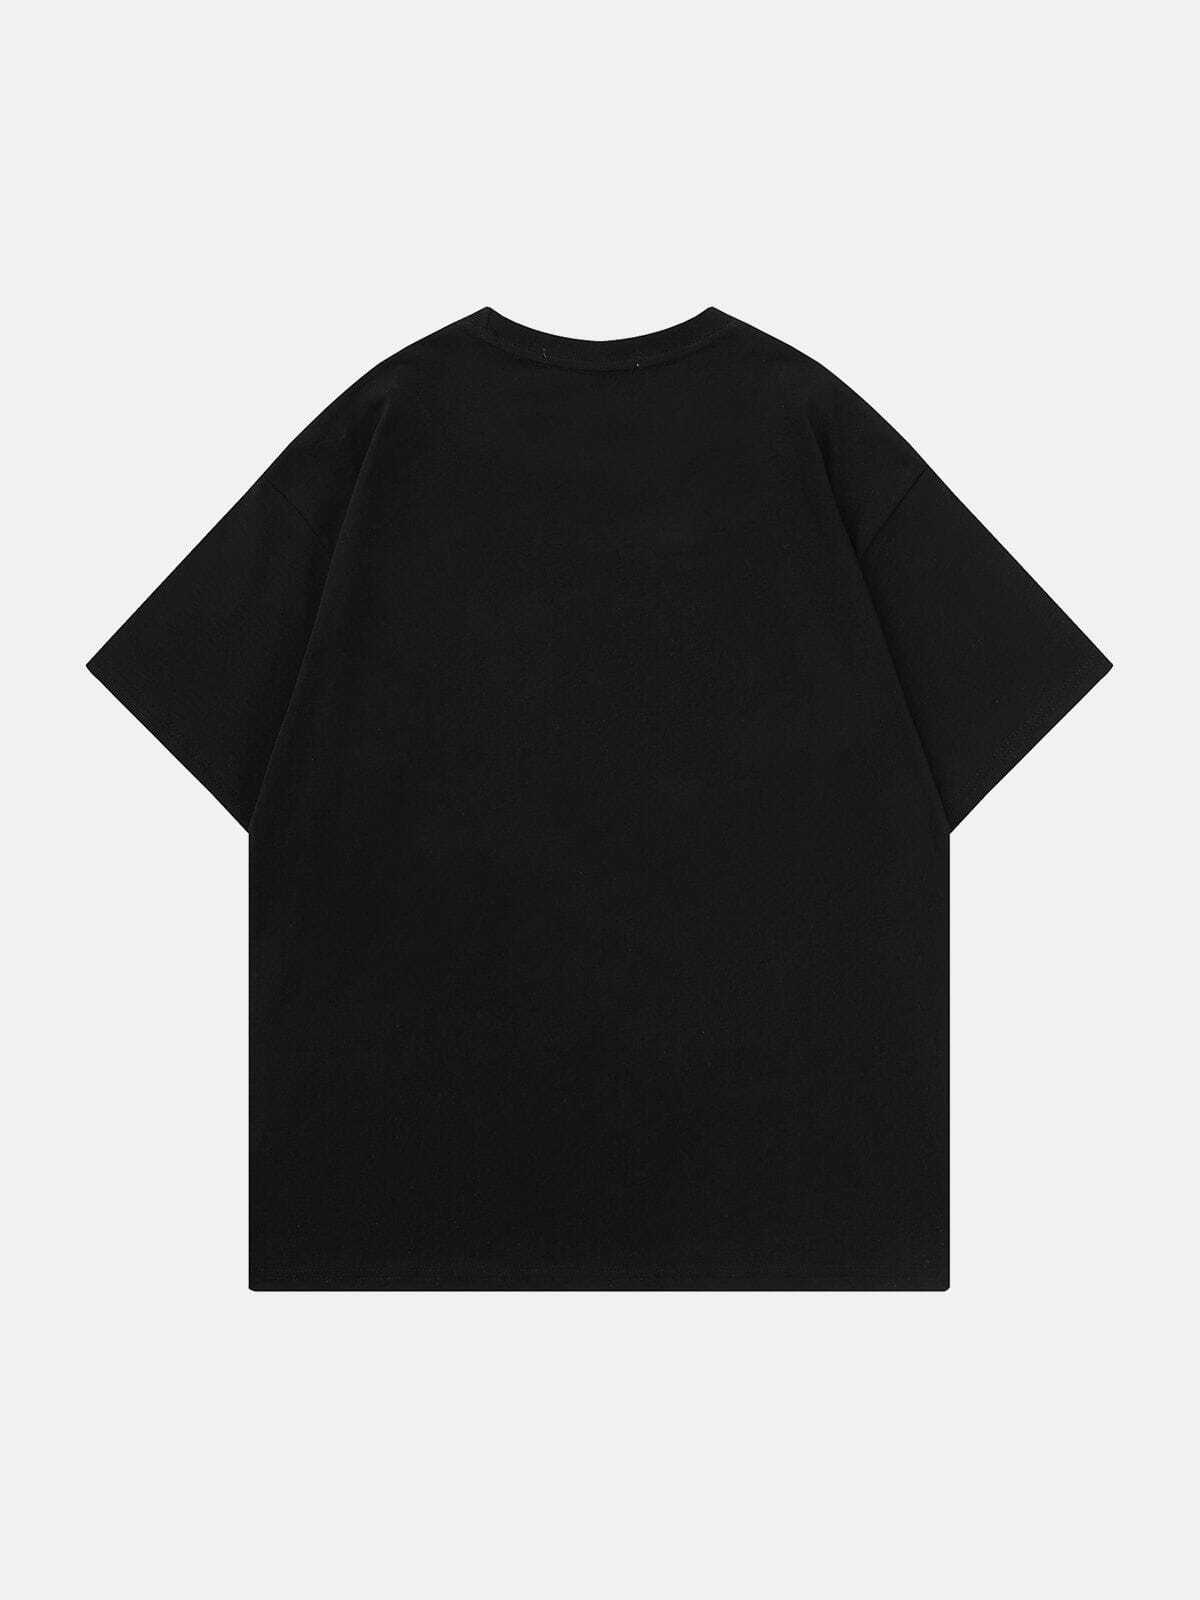 retro cat print tee edgy  vibrant streetwear shirt 8451